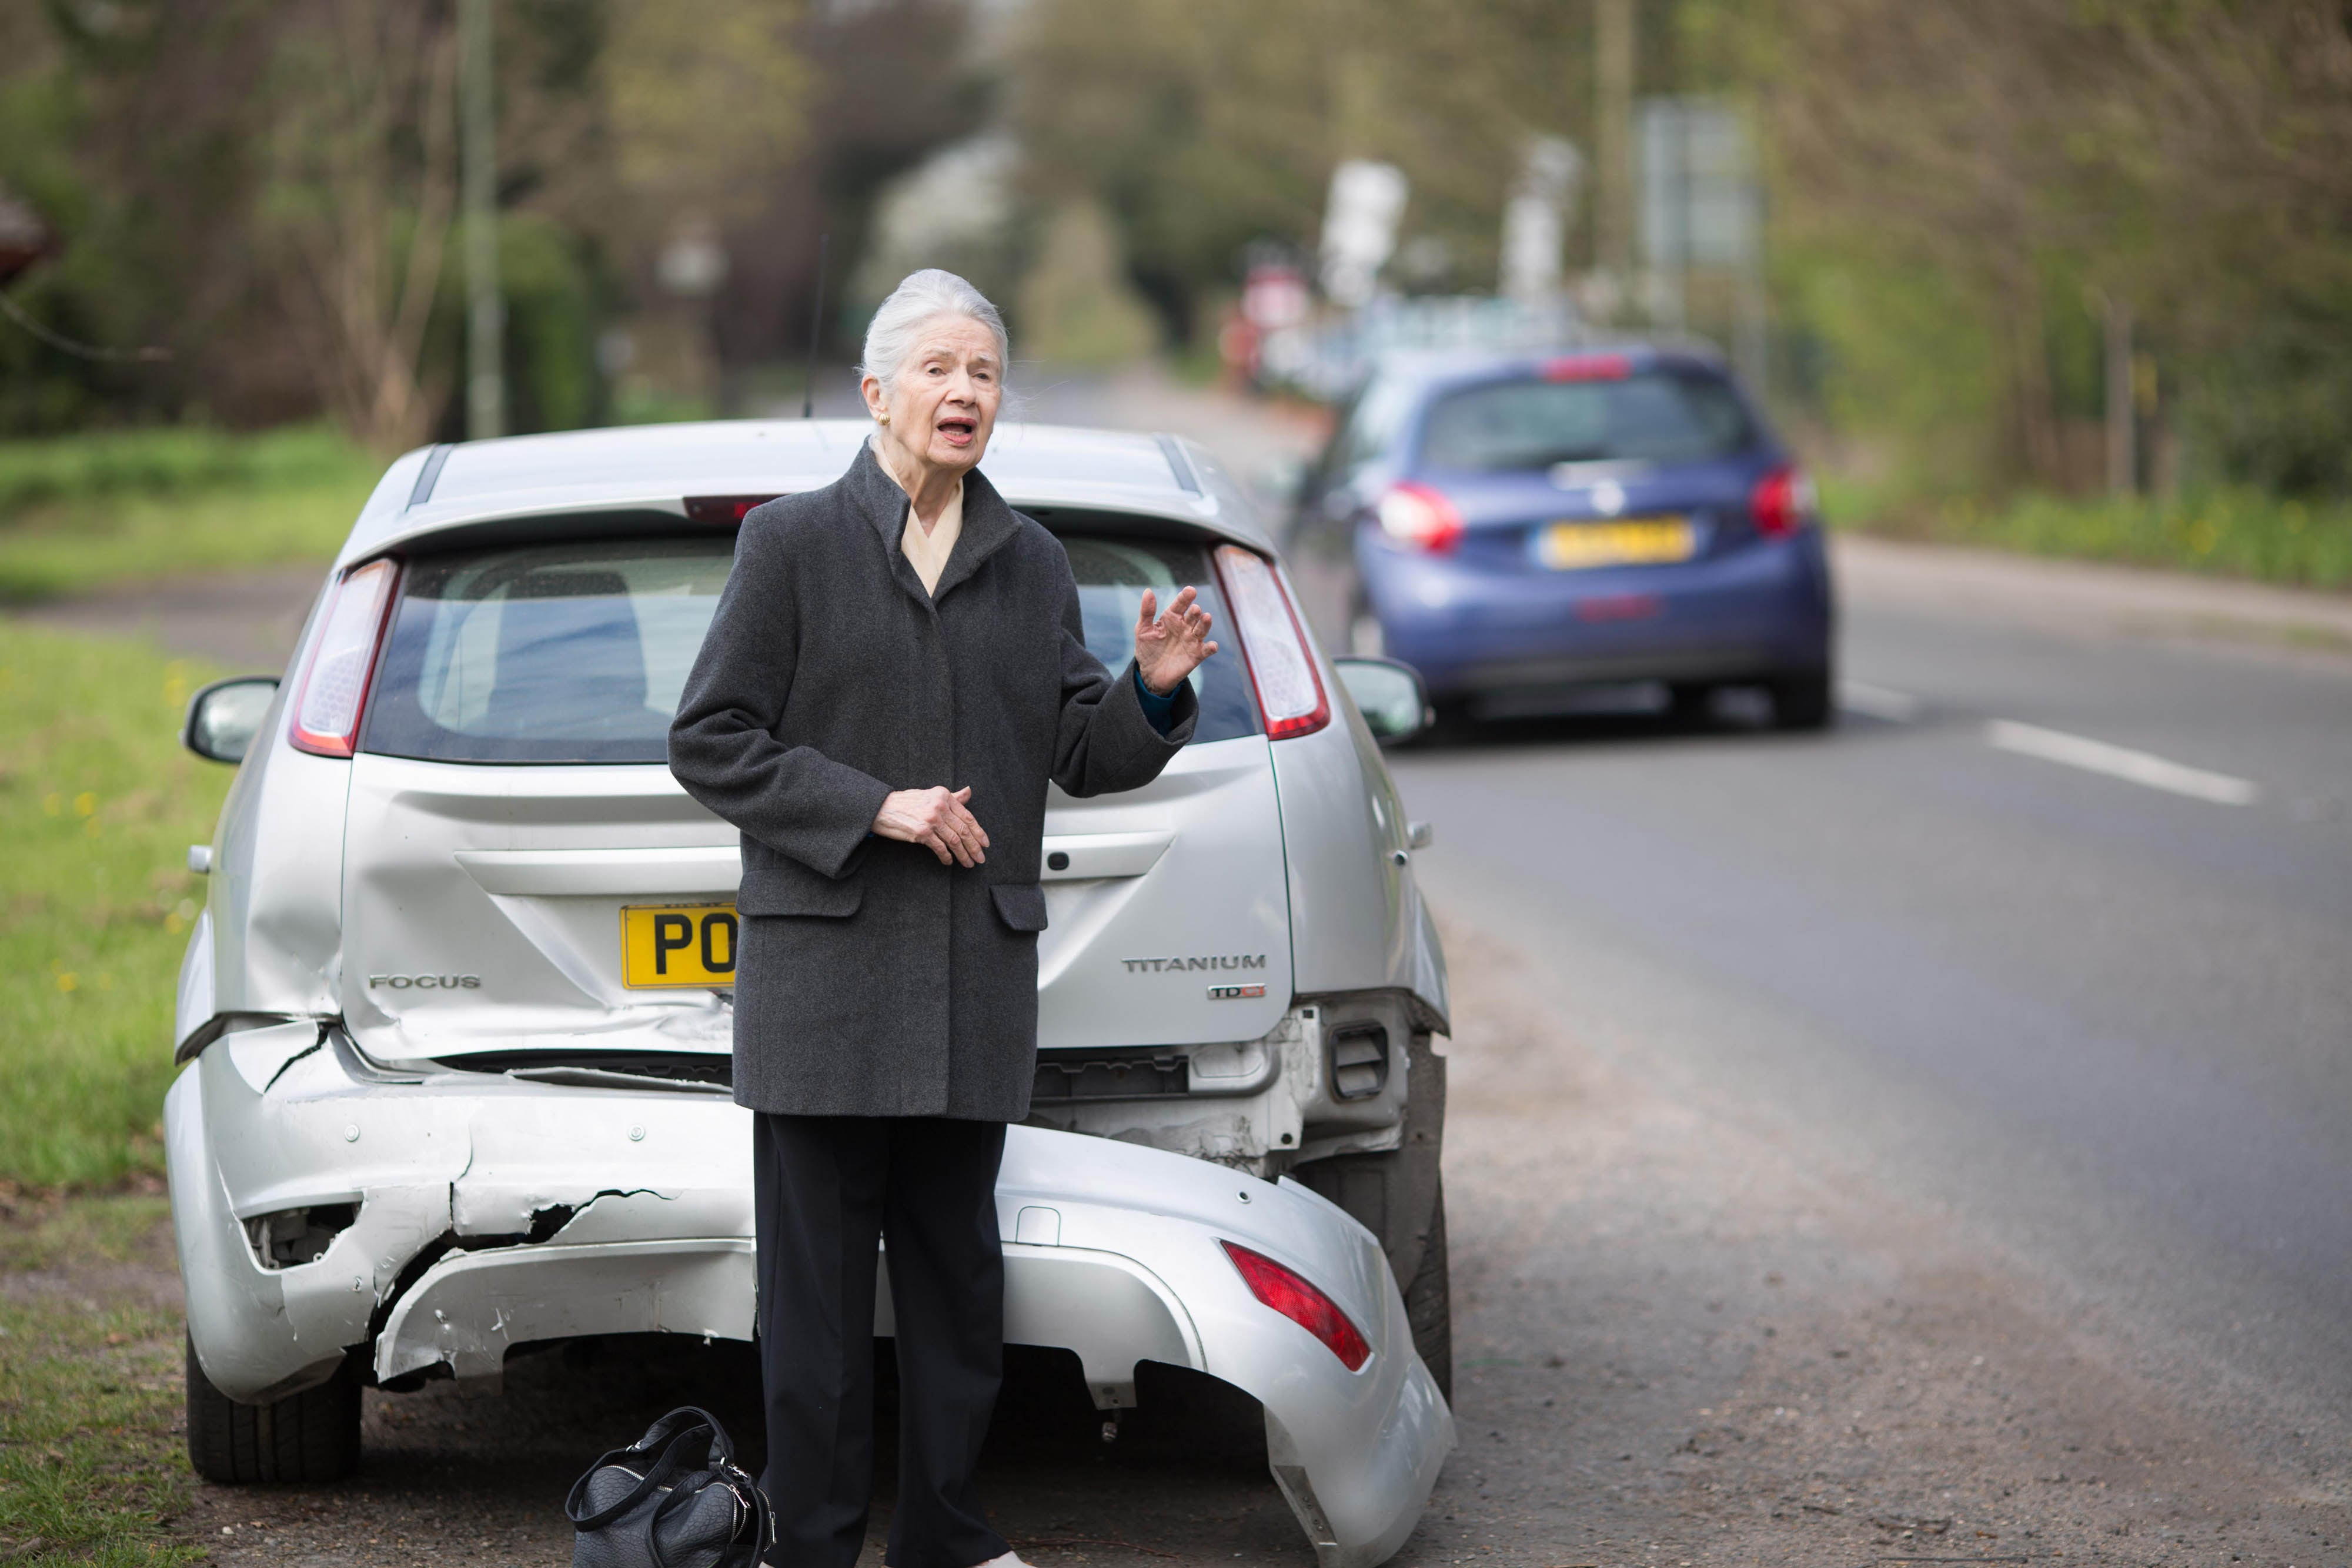 A woman waiting beside a damaged car